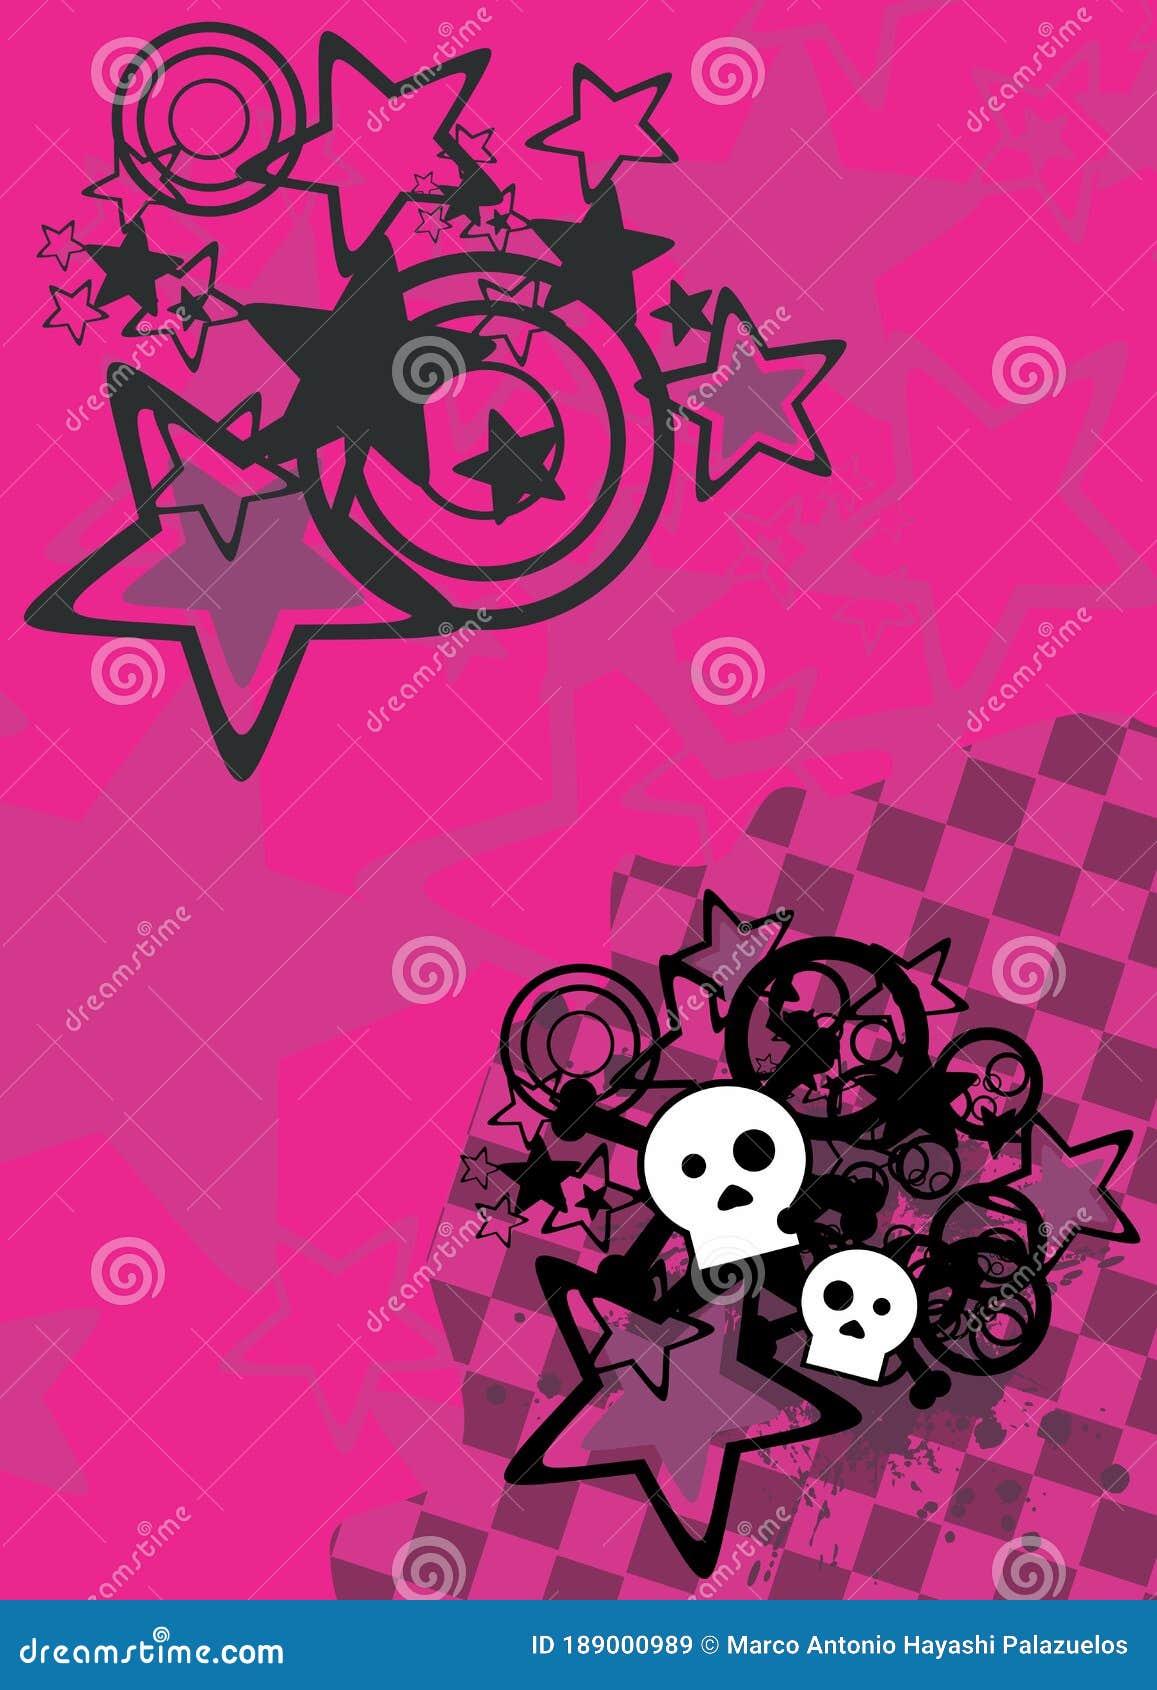 Emo Cartoon Skull and Stars Cel Phone Wallpaper Background Stock Vector   Illustration of halloween caricature 189000961